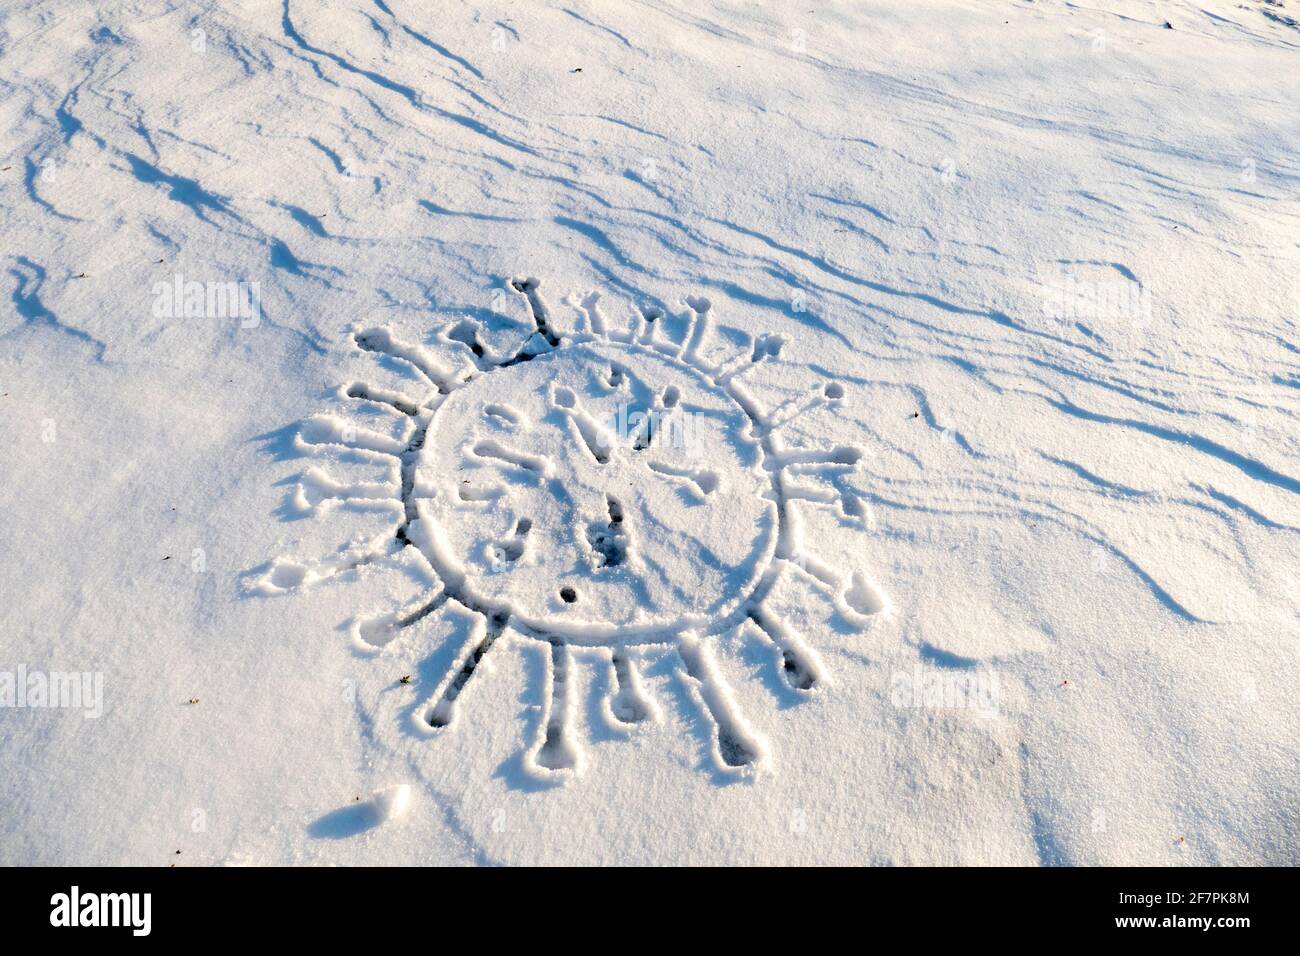 Corona, Covid-19 Virus in den Schnee gemalt Foto Stock